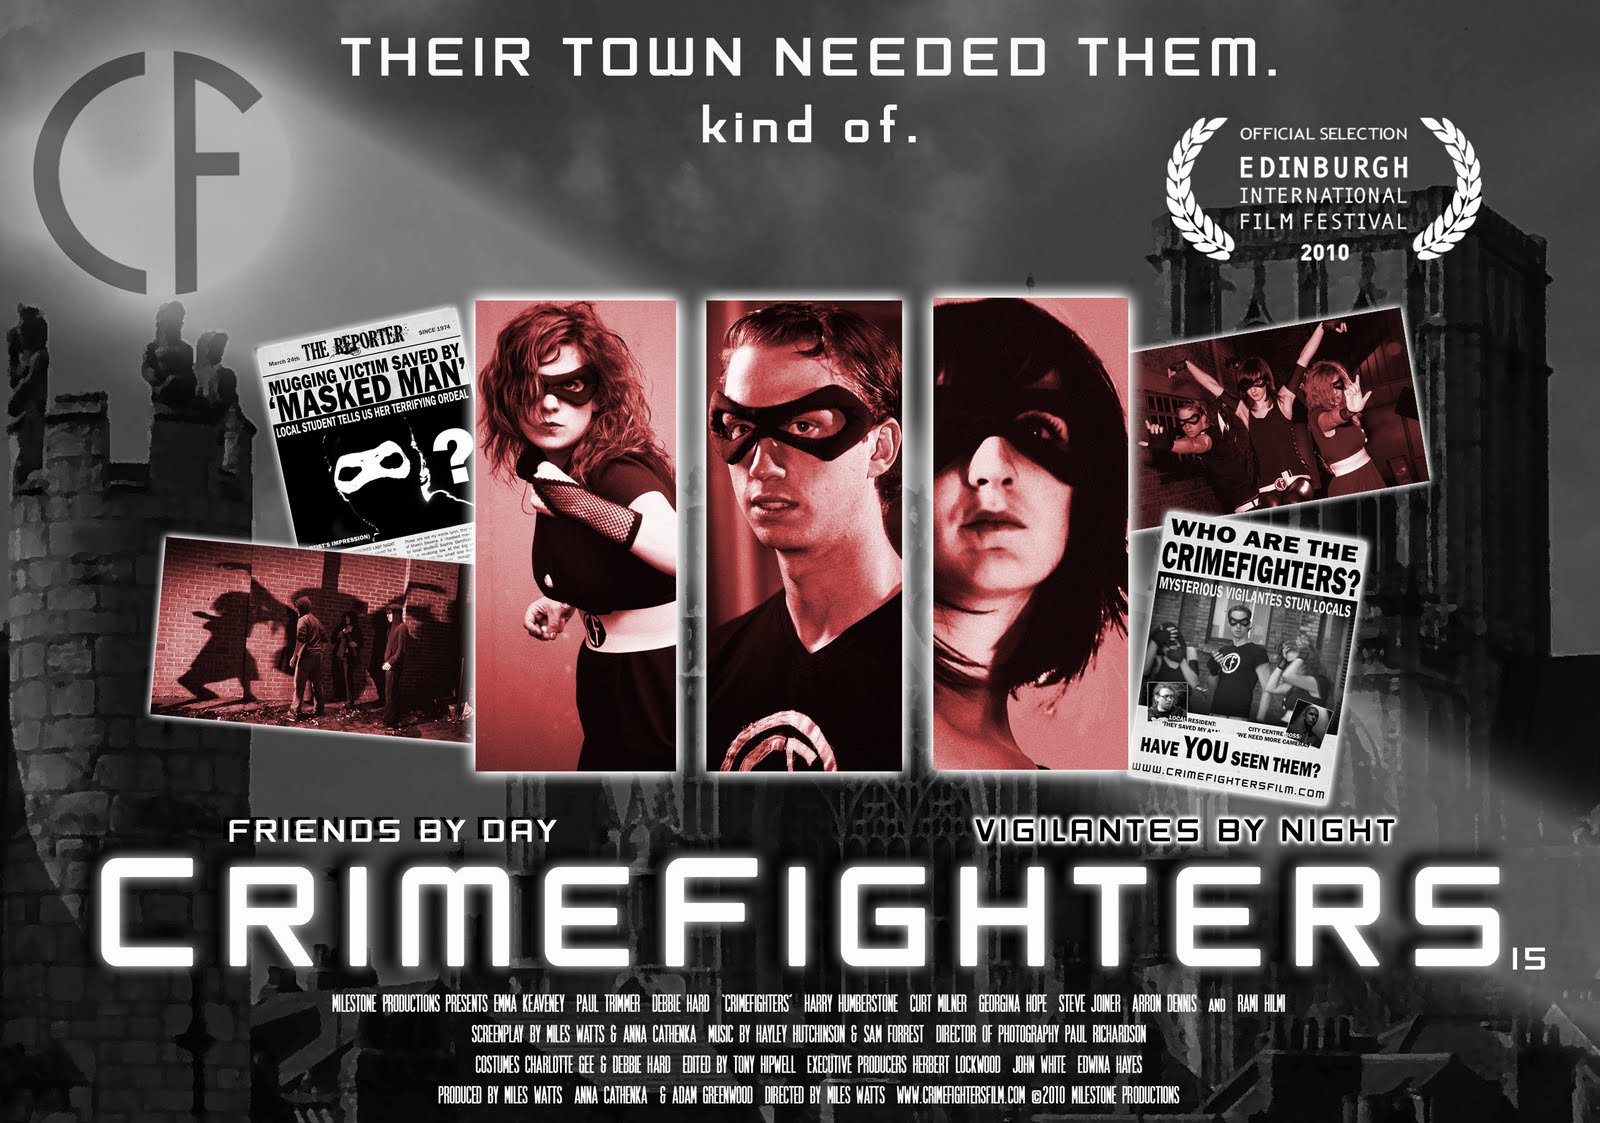 CRIMEFIGHTERS: Starring Ryan Hunter as Danny Cage, Emma Keaveney-Roys as Ella, Debbie Hard and Paul Trimmer.